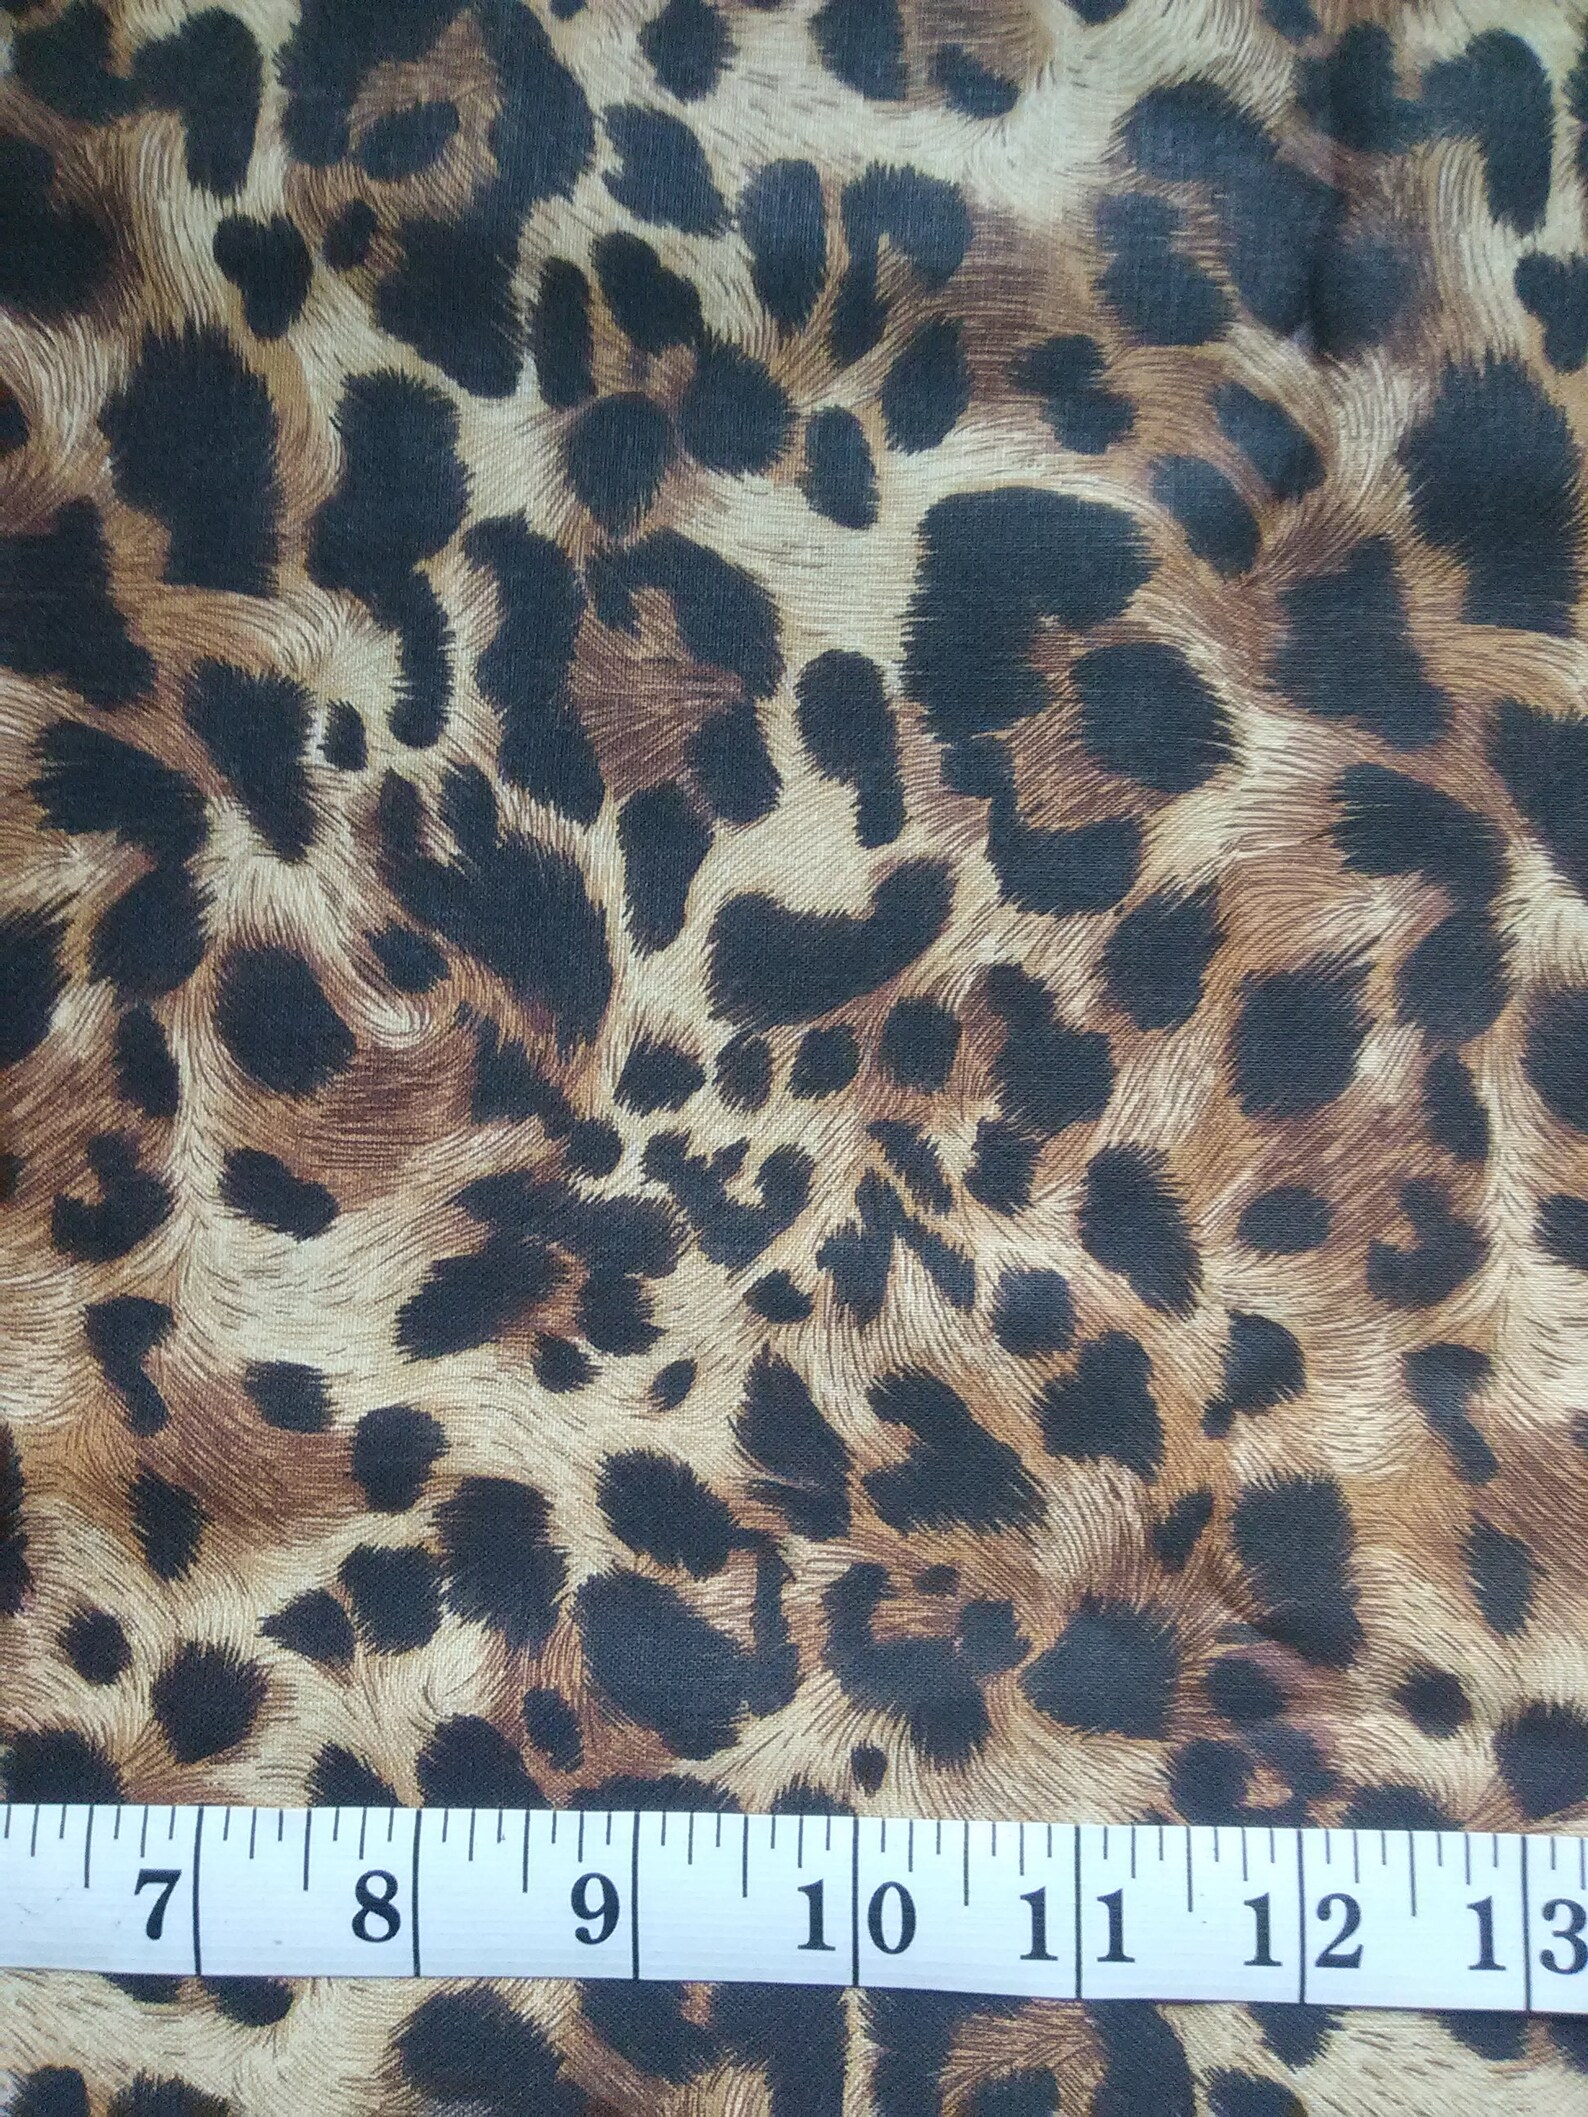 Leopard Print Cotton Fabric 100% Cotton Animal Print Fabric - Etsy